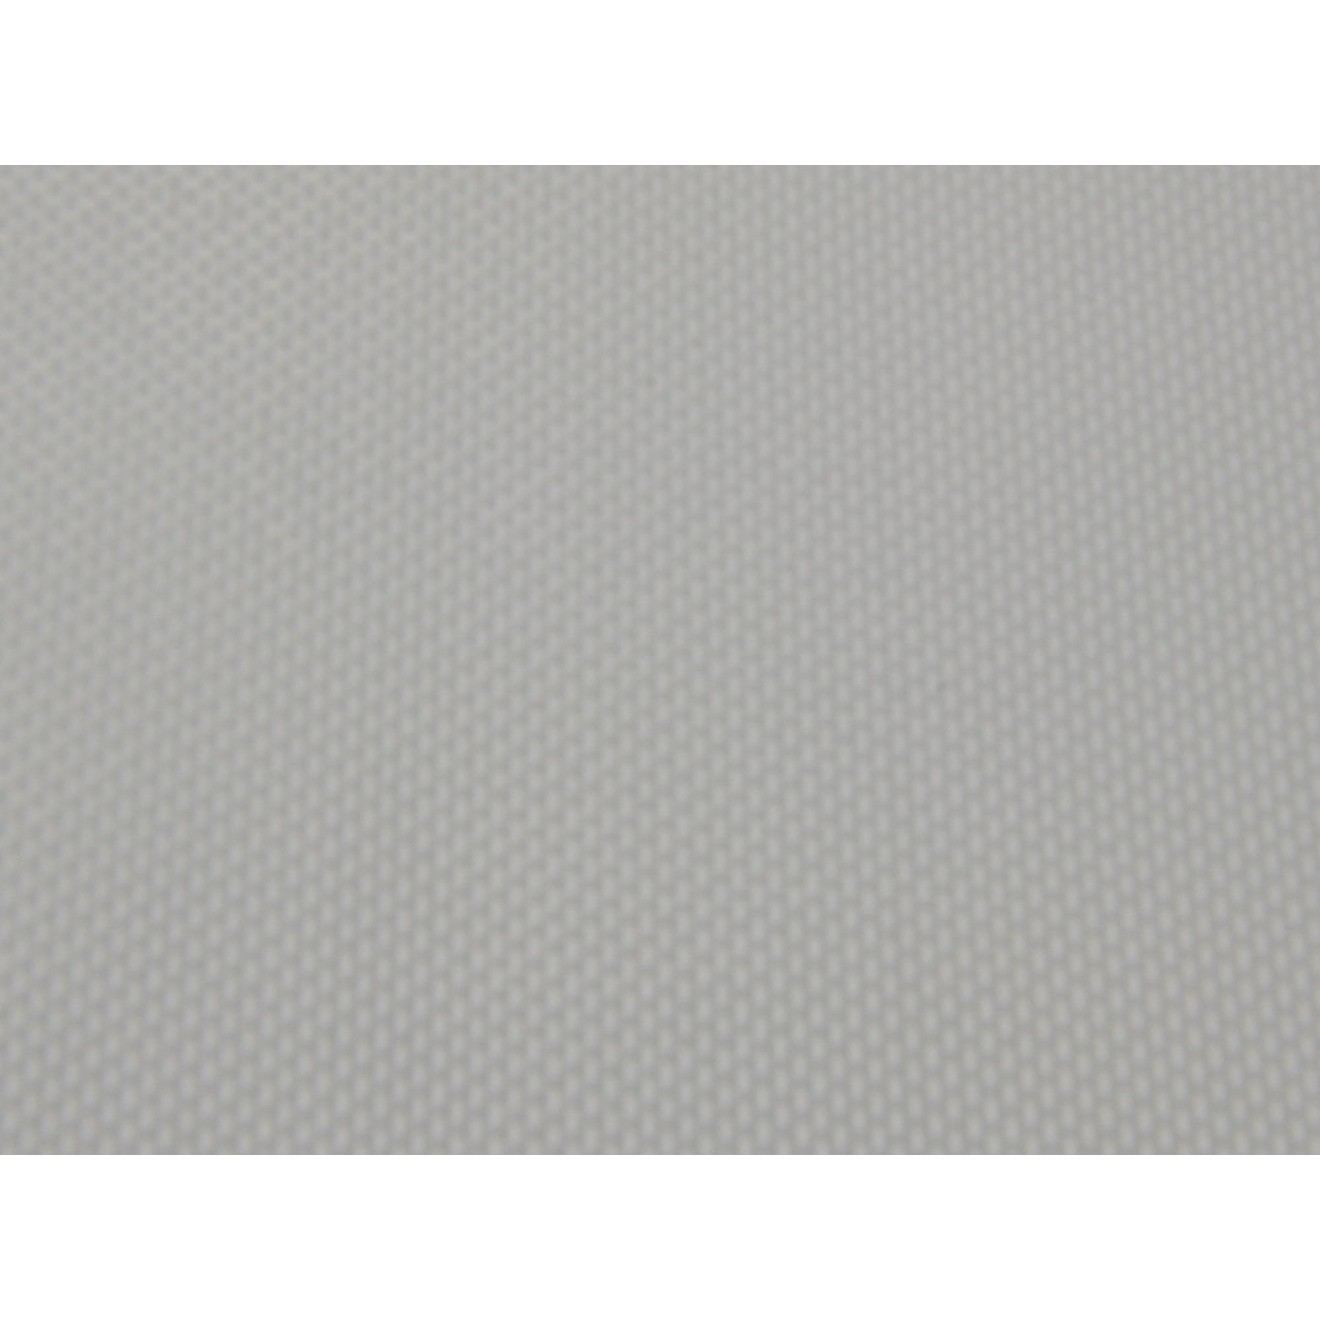 Glass fabric Interglas 90070, 80g/m², plain weave